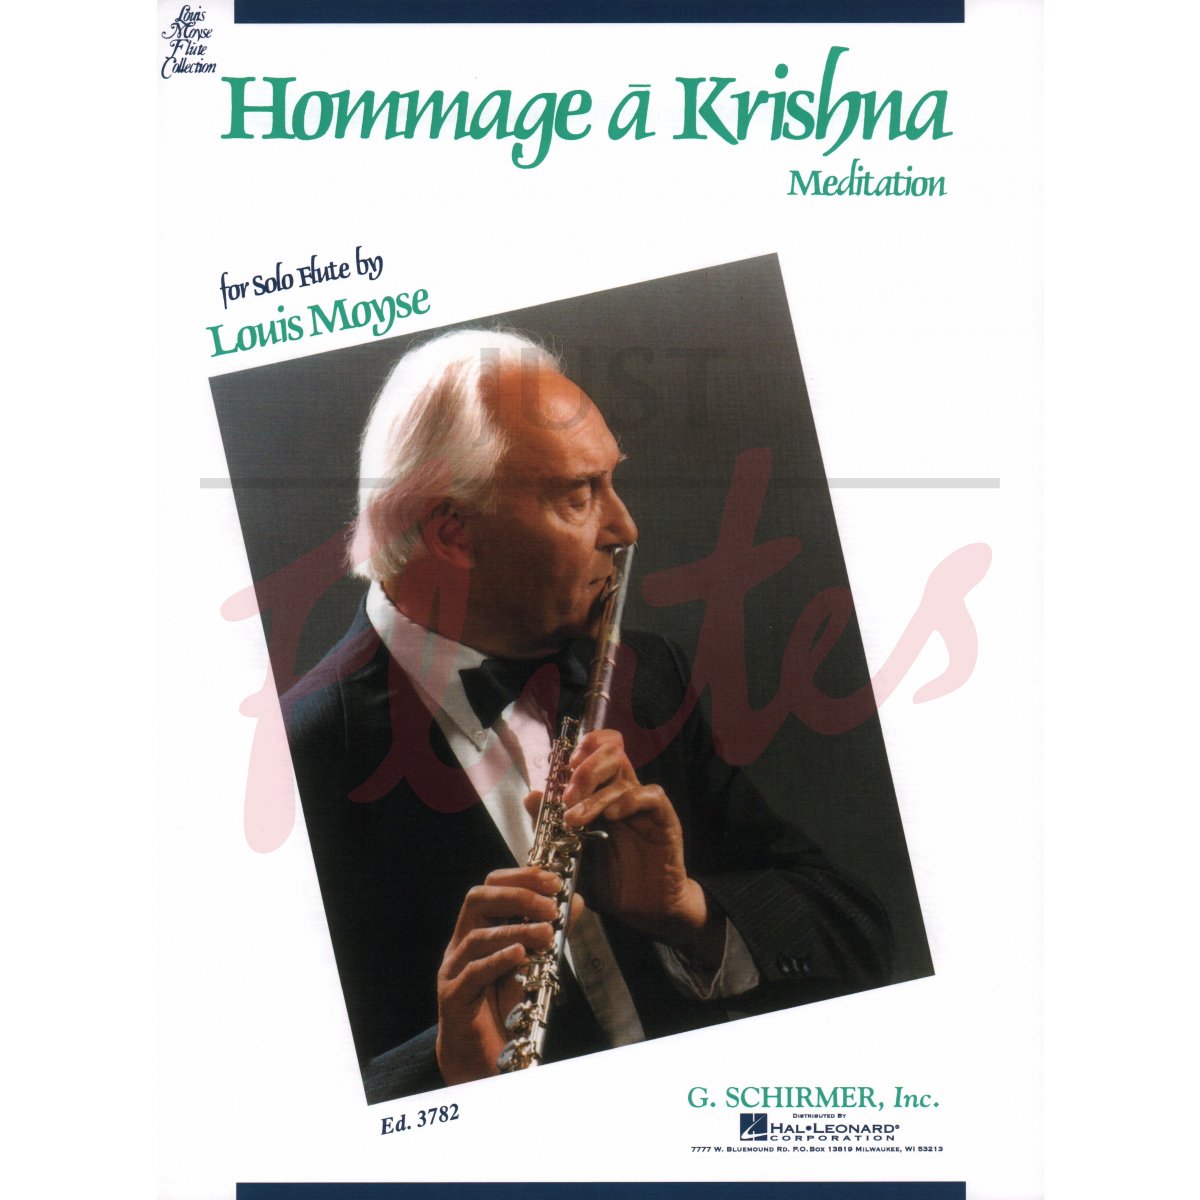 Hommage à Krishna for Solo Flute